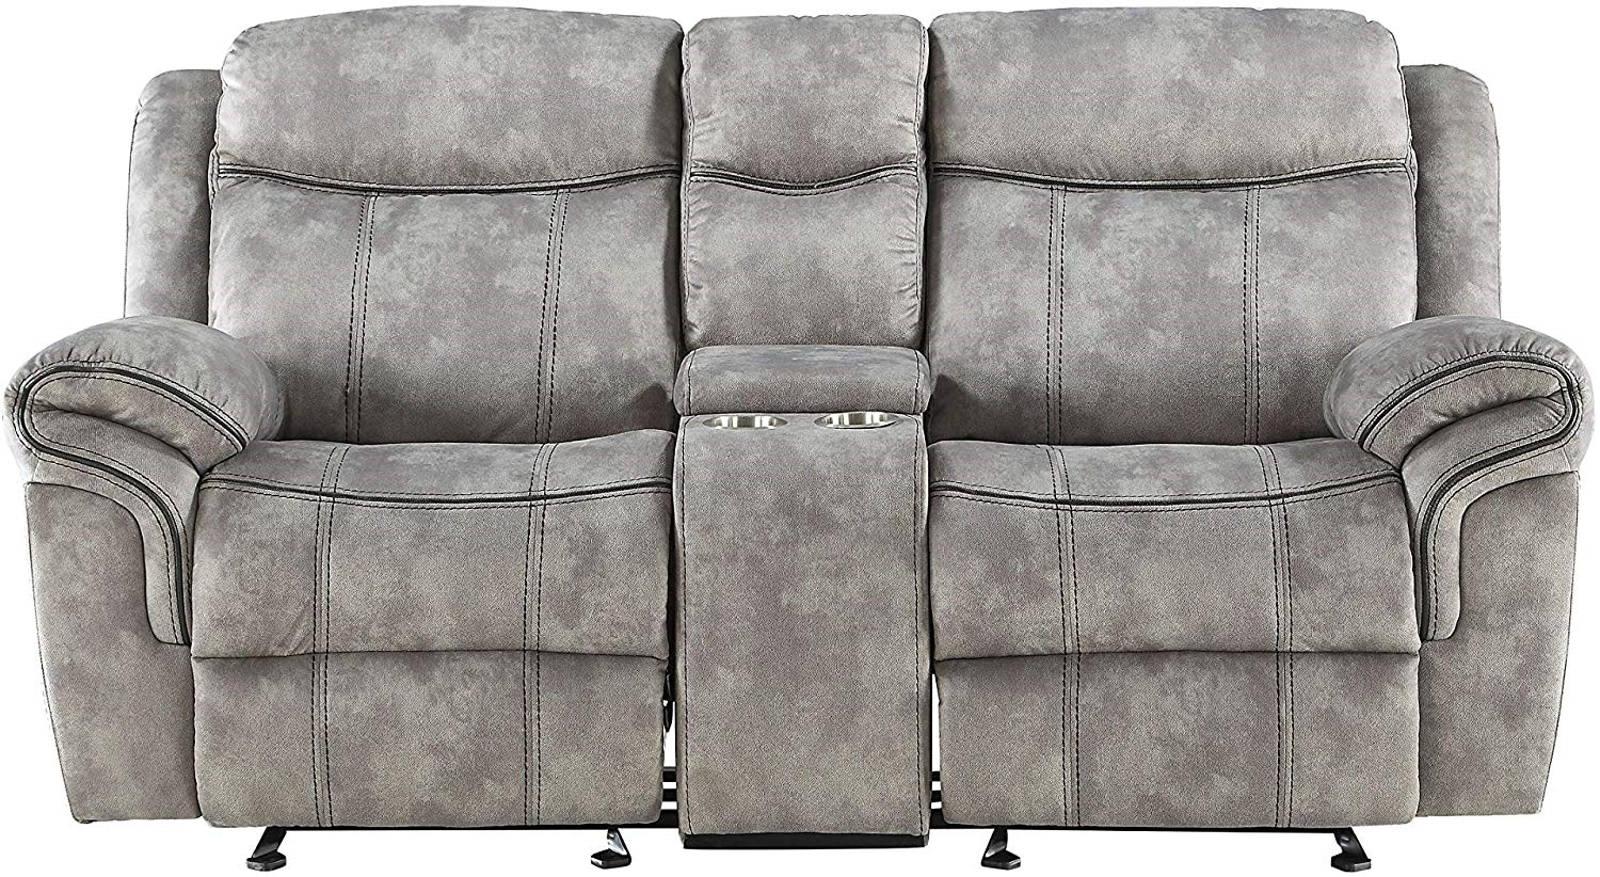 Acme Furniture Zubaida Motion Loveseat with Console in 2-Tone Gray Velvet 55026  Half Price Furniture